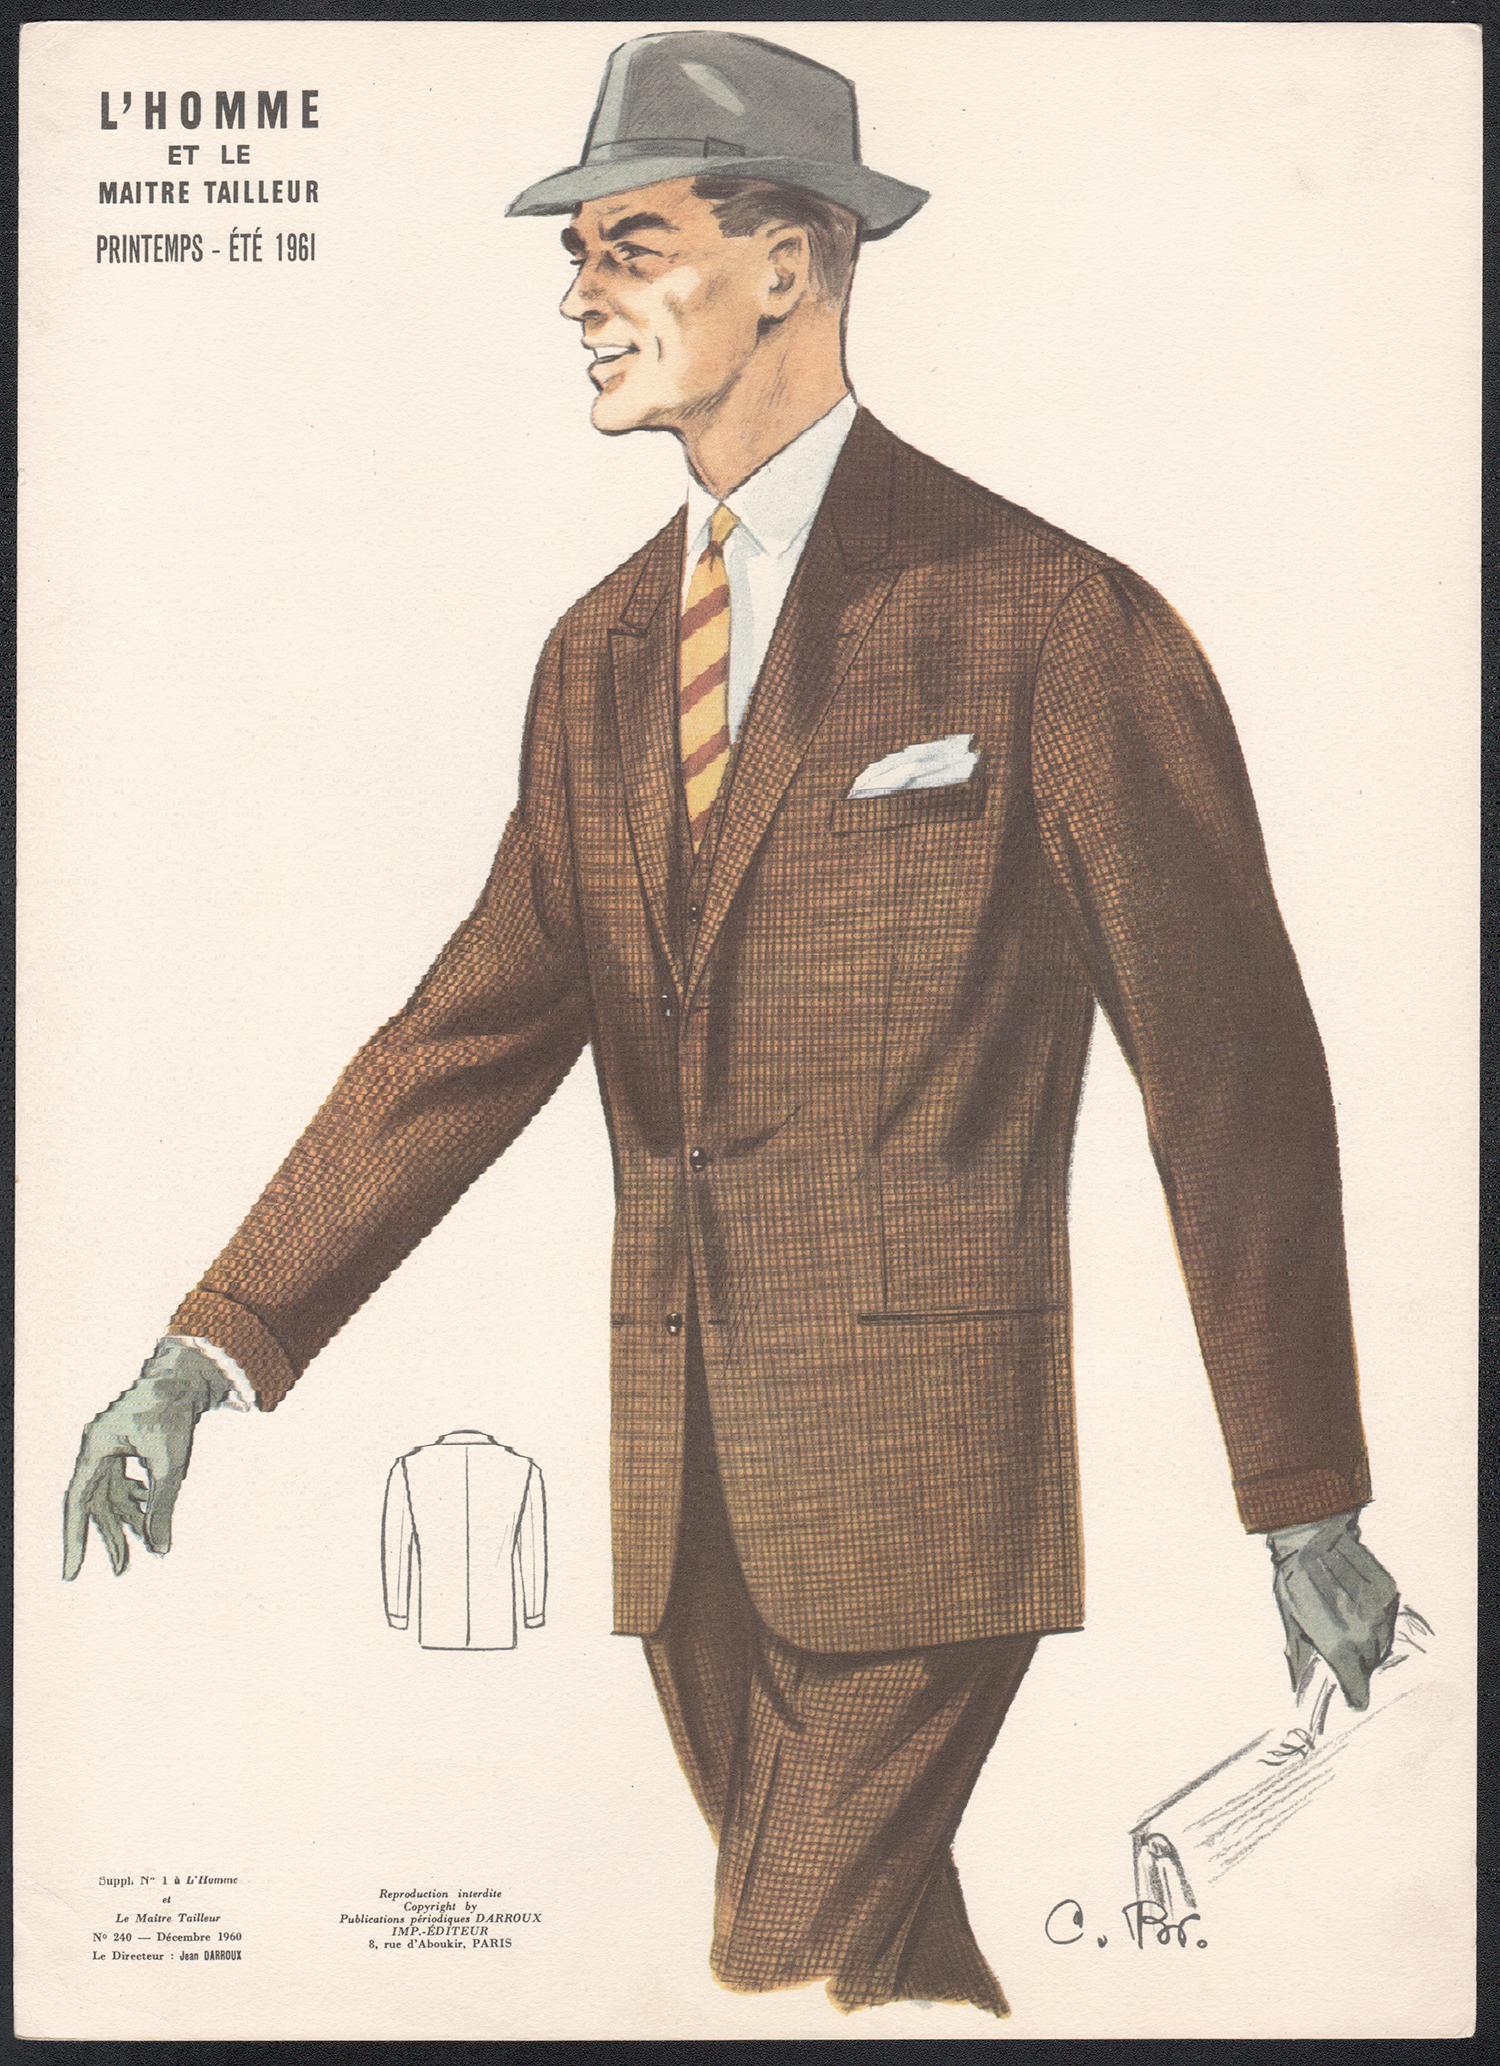 Jean Darroux - French Mid-Century Mens Fashion Design Vintage Suit Lithograph Print For Sale at